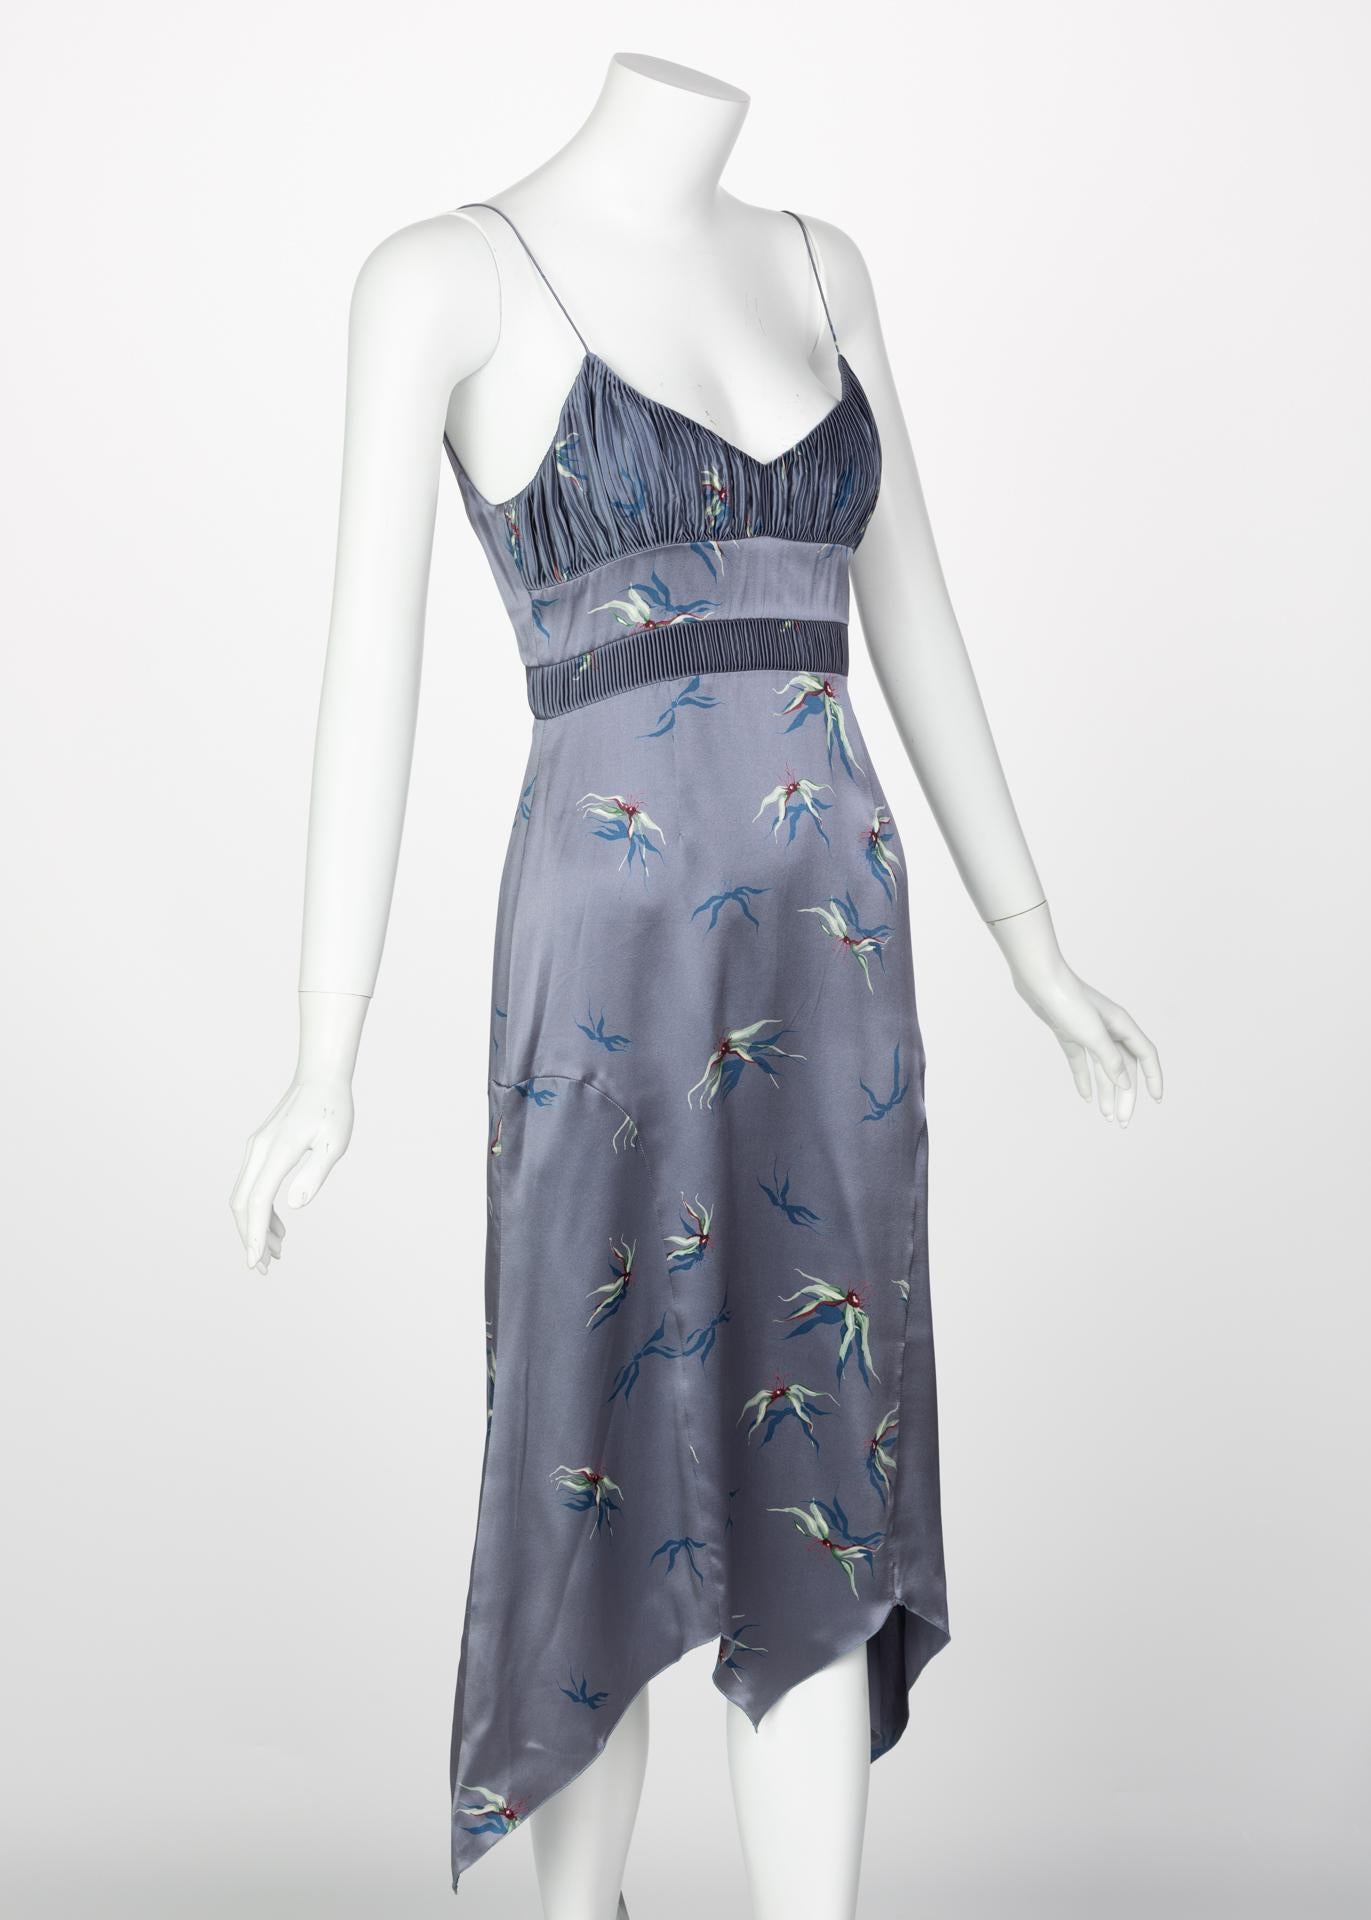 stella mccartney embroidered slip dress